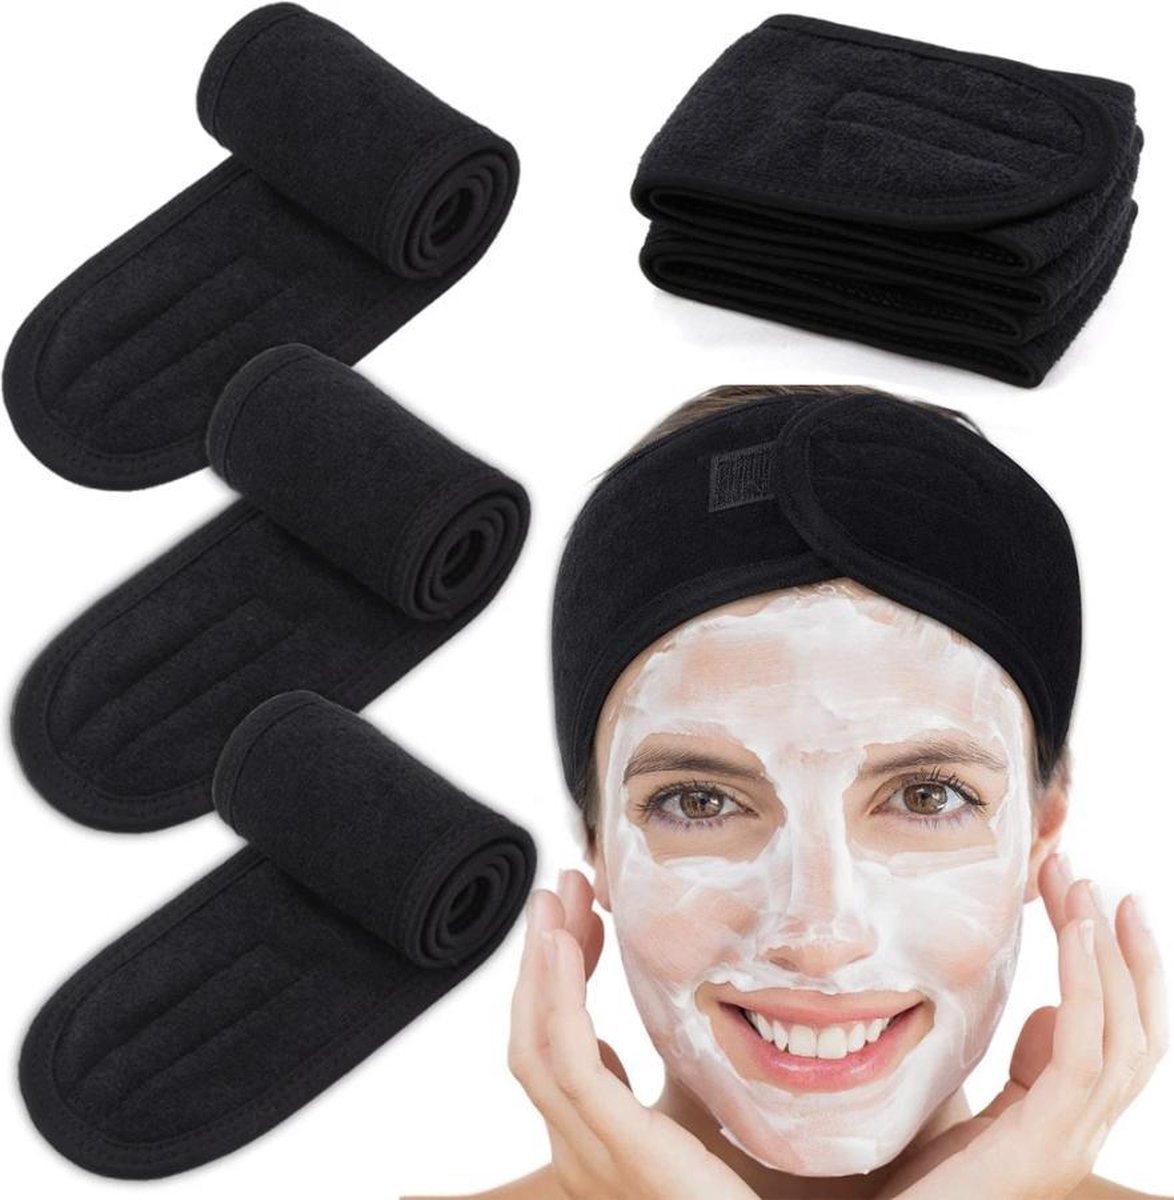 1pcs Eyelashes Extension Spa Facial Headband Make Up Wrap Head Terry Cloth Hairband Stretch Towel black Magic Tape / Haarbanden / Hoofdband / Make Up Stretch Handdoek Met Magic Tap ZWART